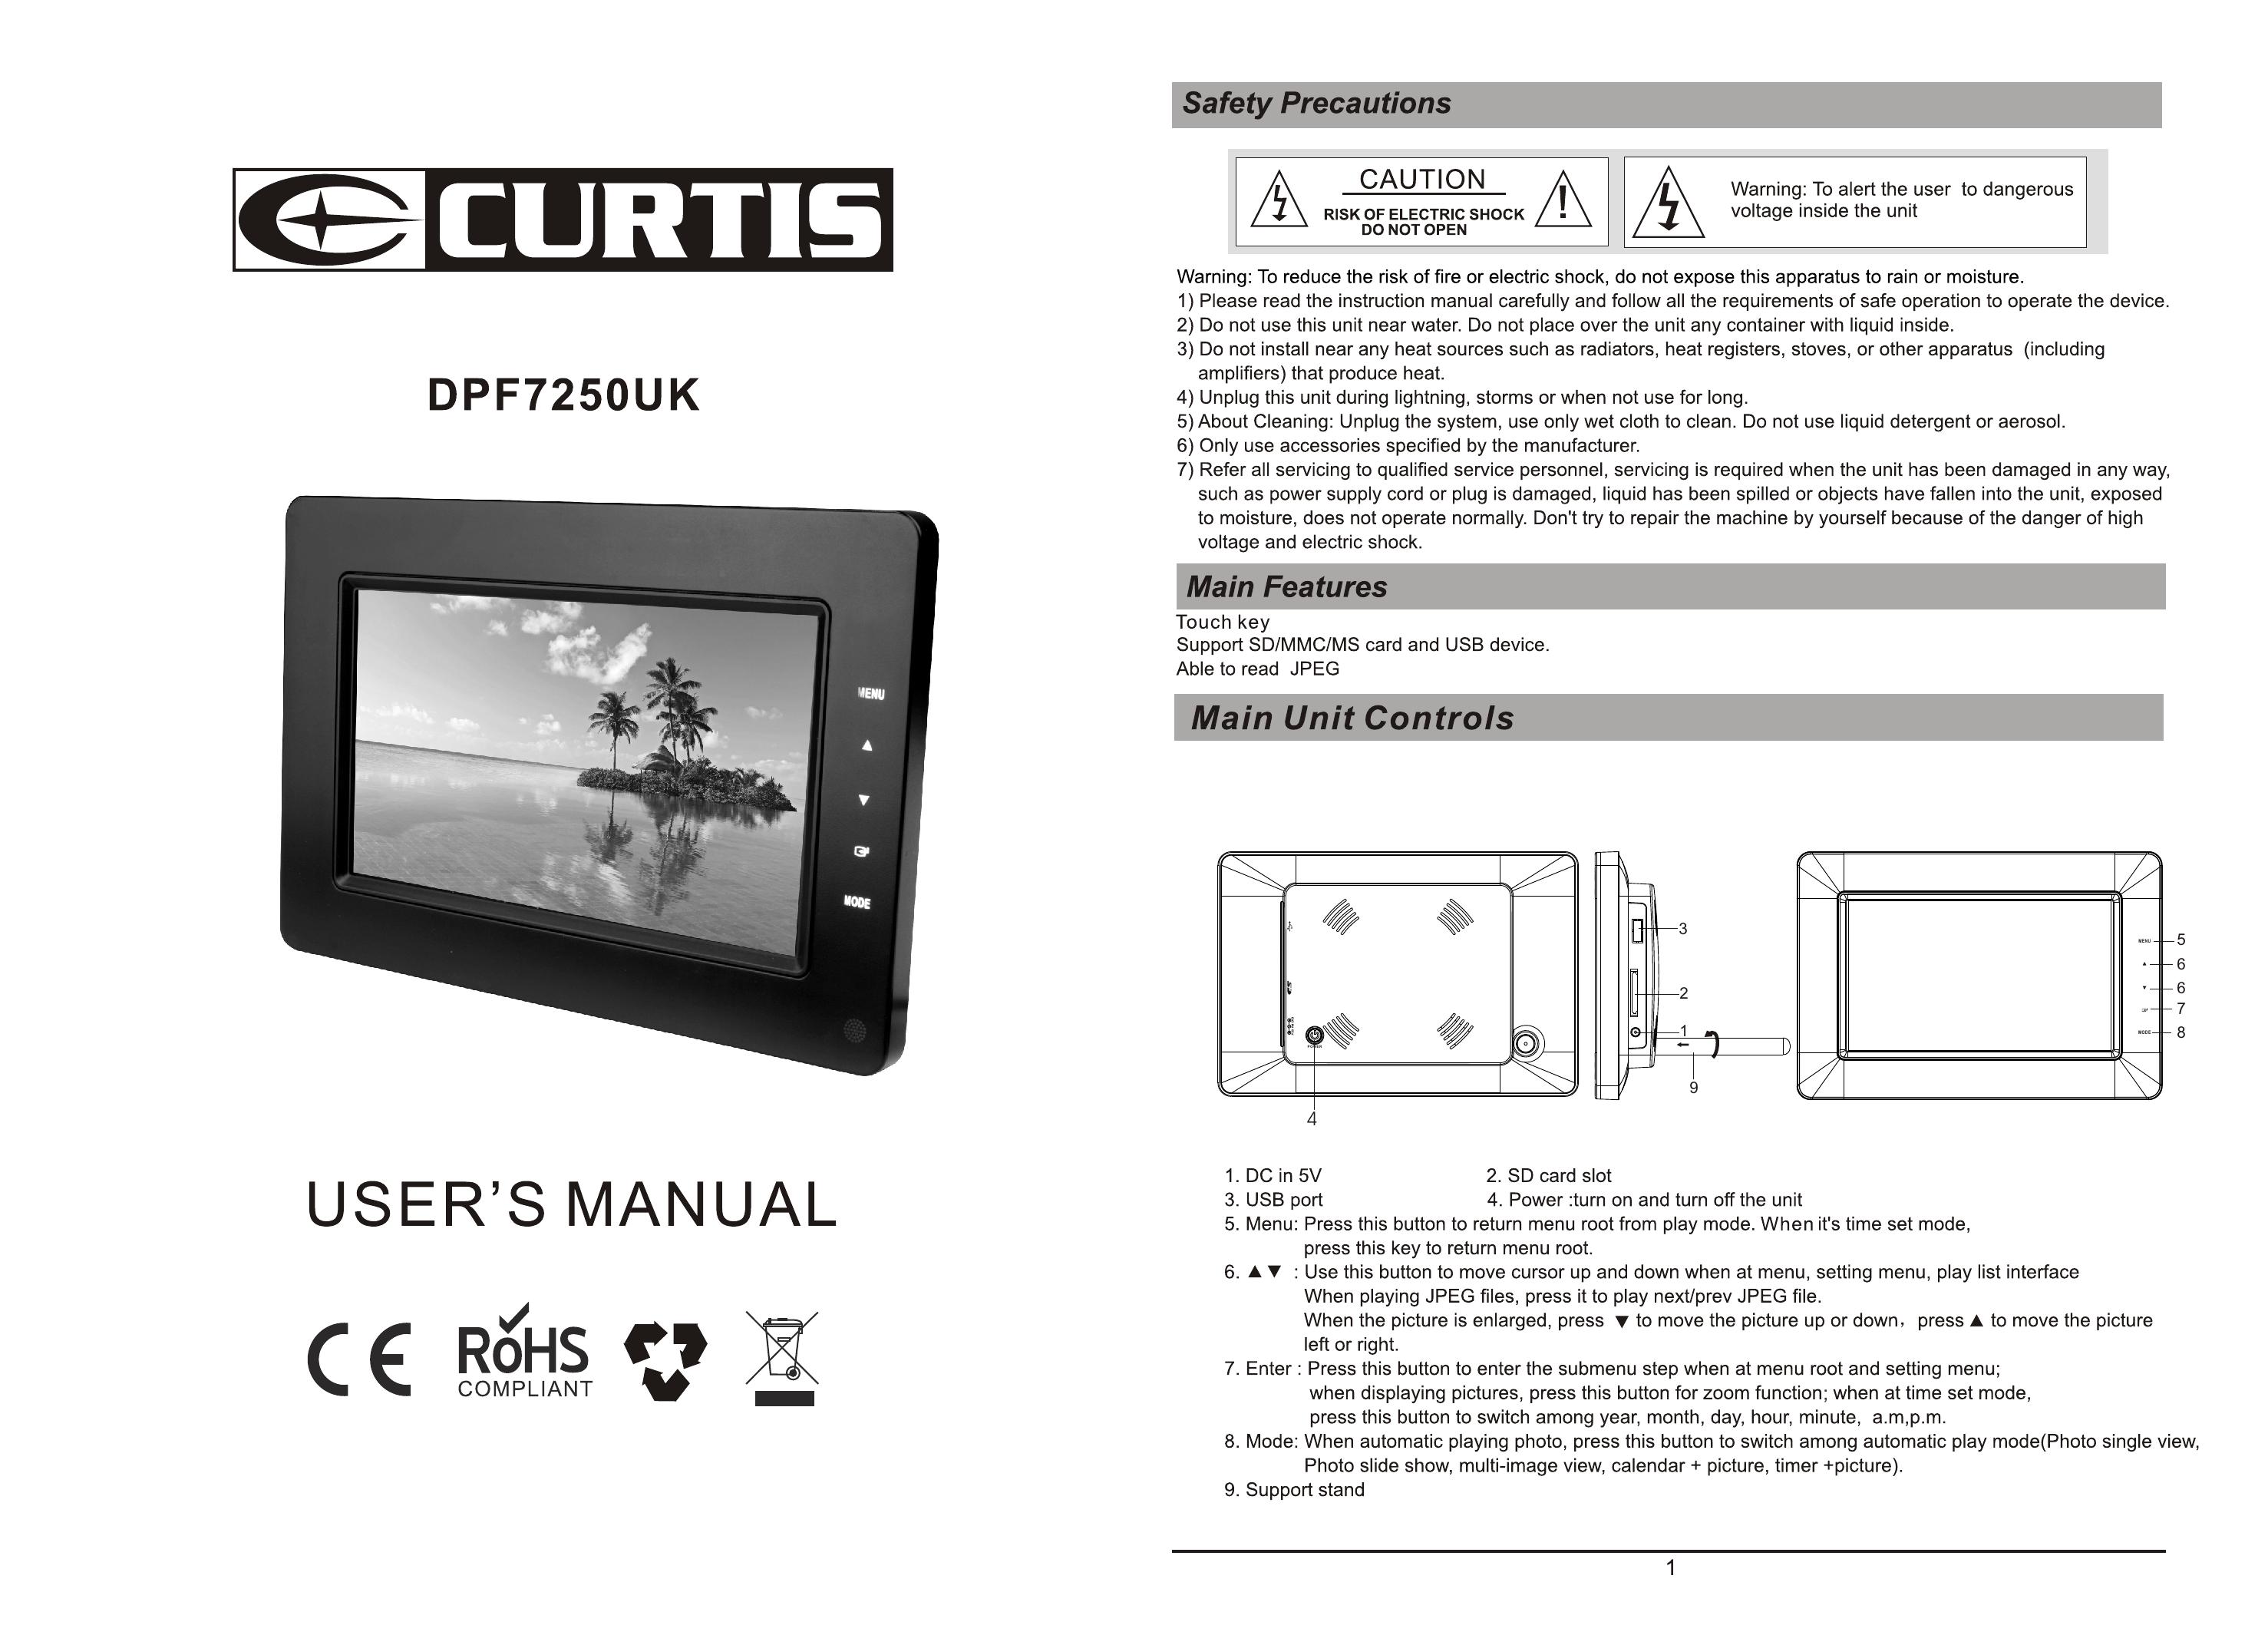 Curtis DPF7250UK Digital Photo Frame User Manual